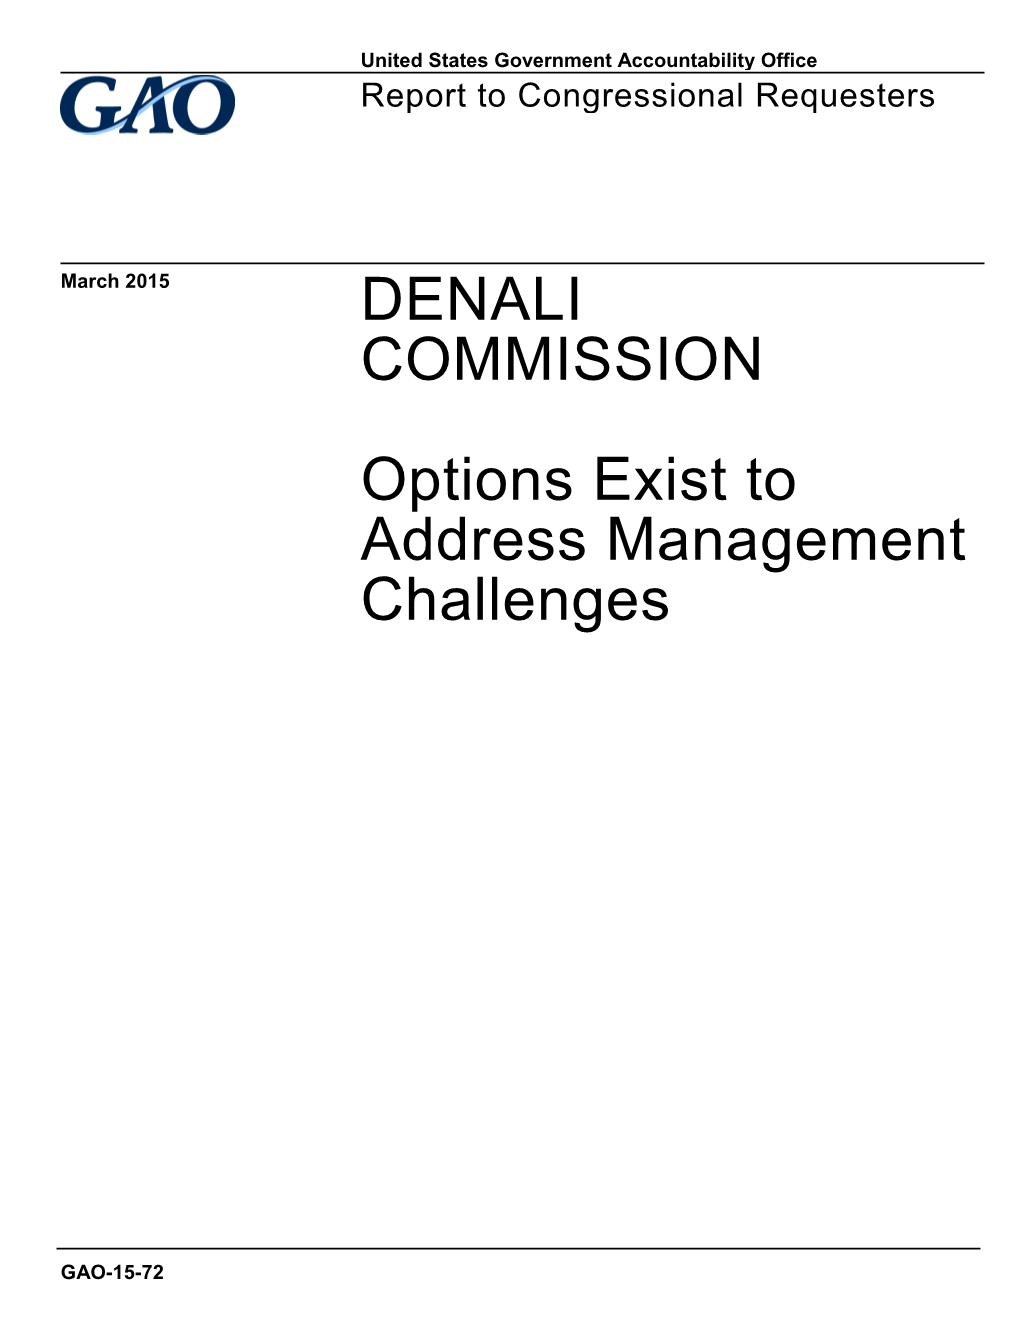 DENALI COMMISSION Options Exist to Address Management Challenges